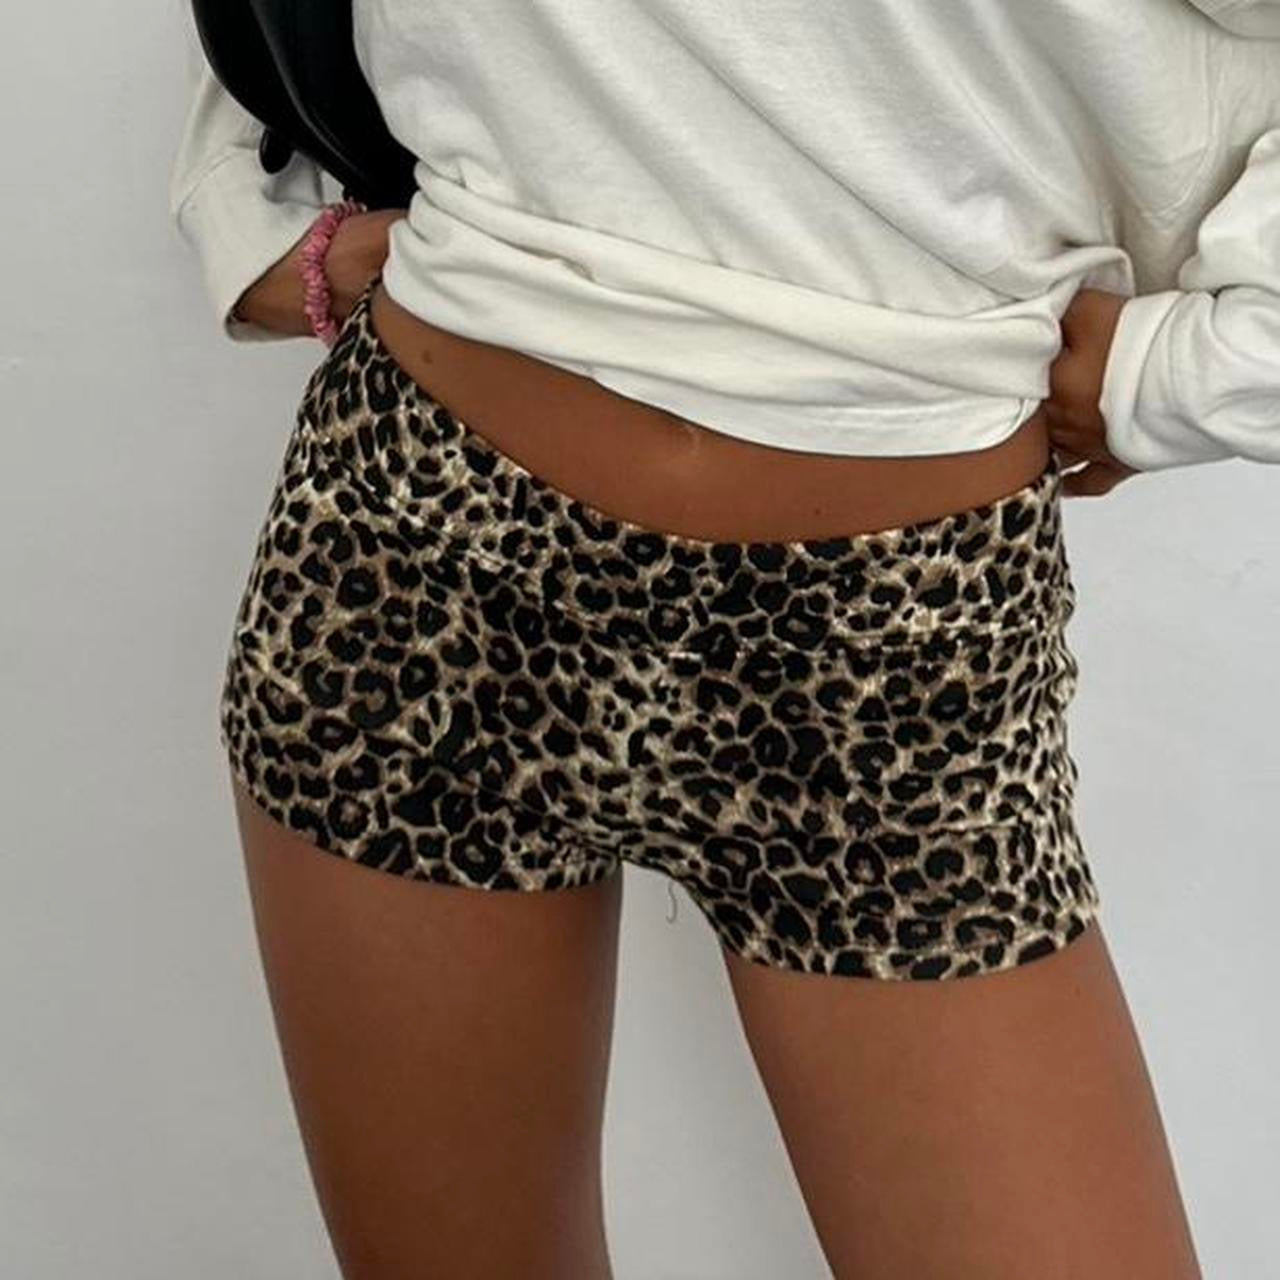 Vintage leopard print shorts